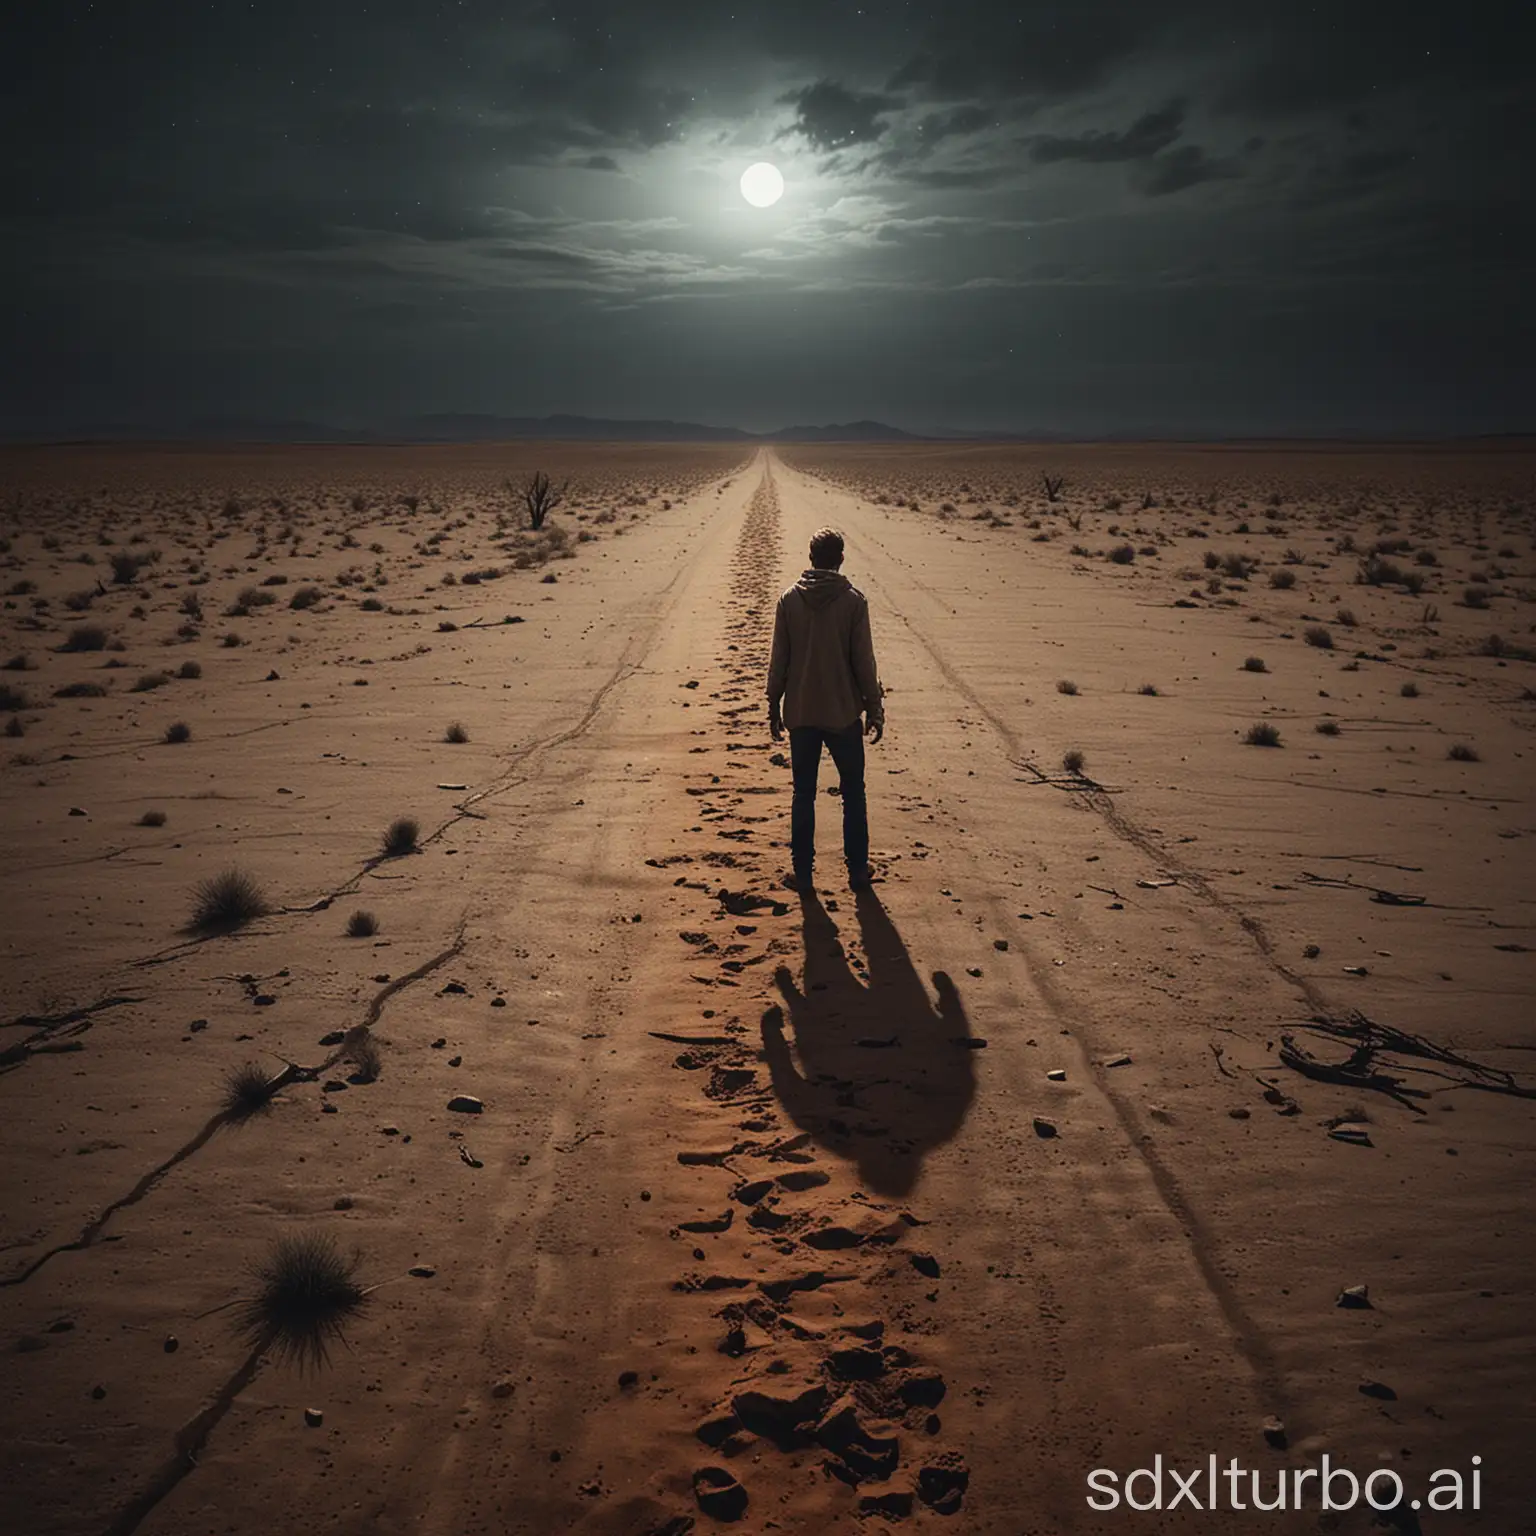 Man-Alone-in-Desert-Night-True-Middle-of-Nowhere-Horror-Stories